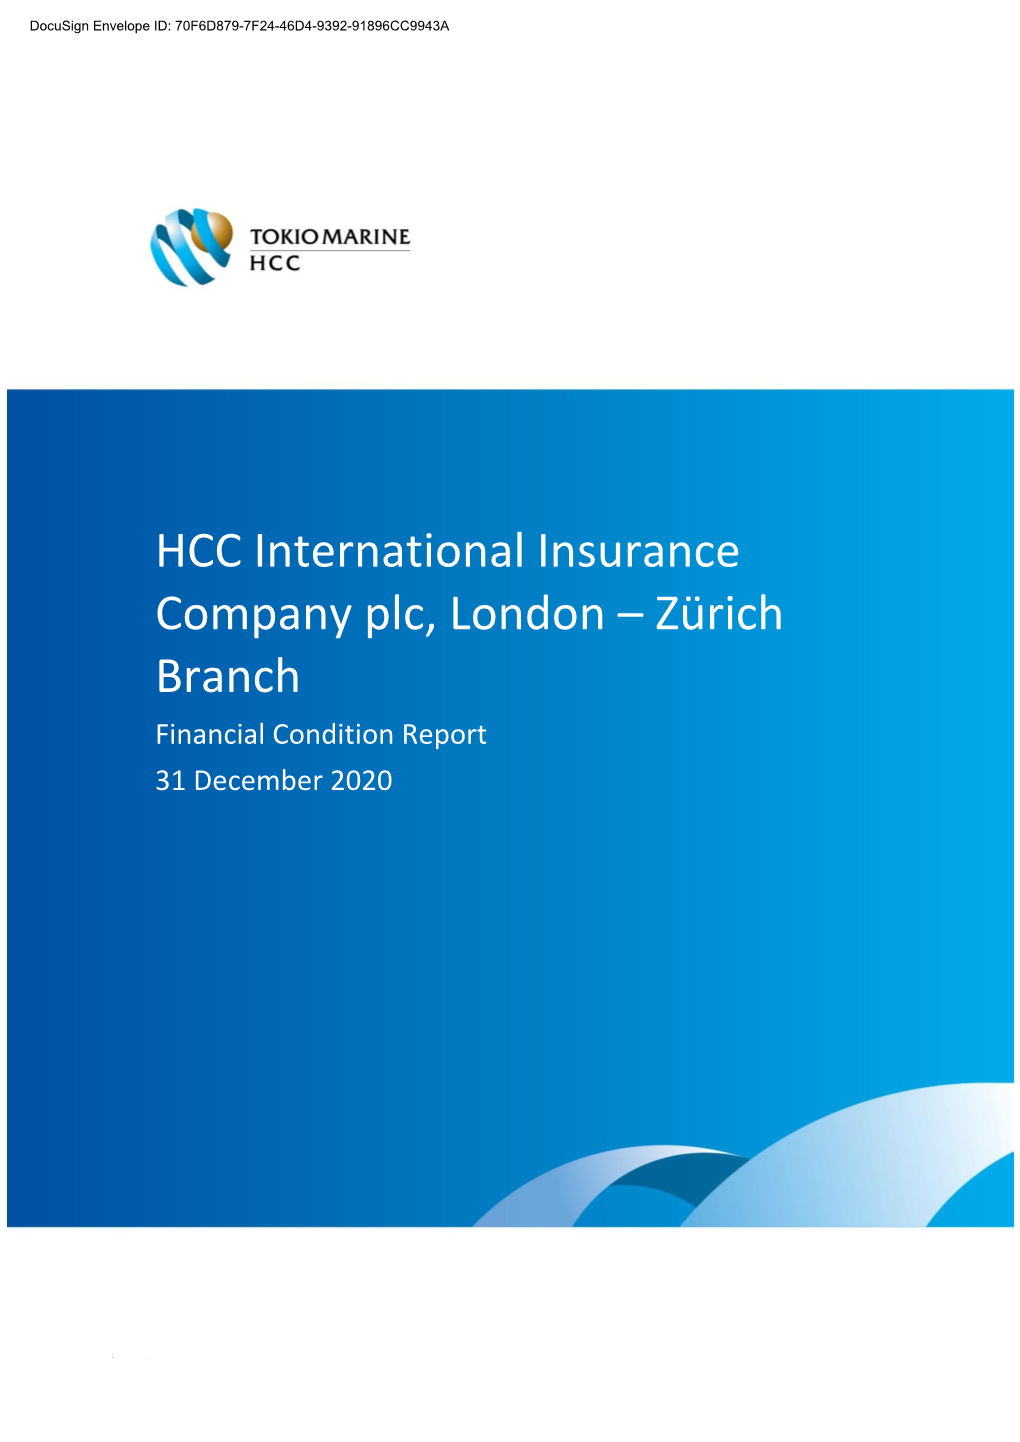 HCC International Insurance Company Plc, London – Zürich Branch Financial Condition Report 31 December 2020